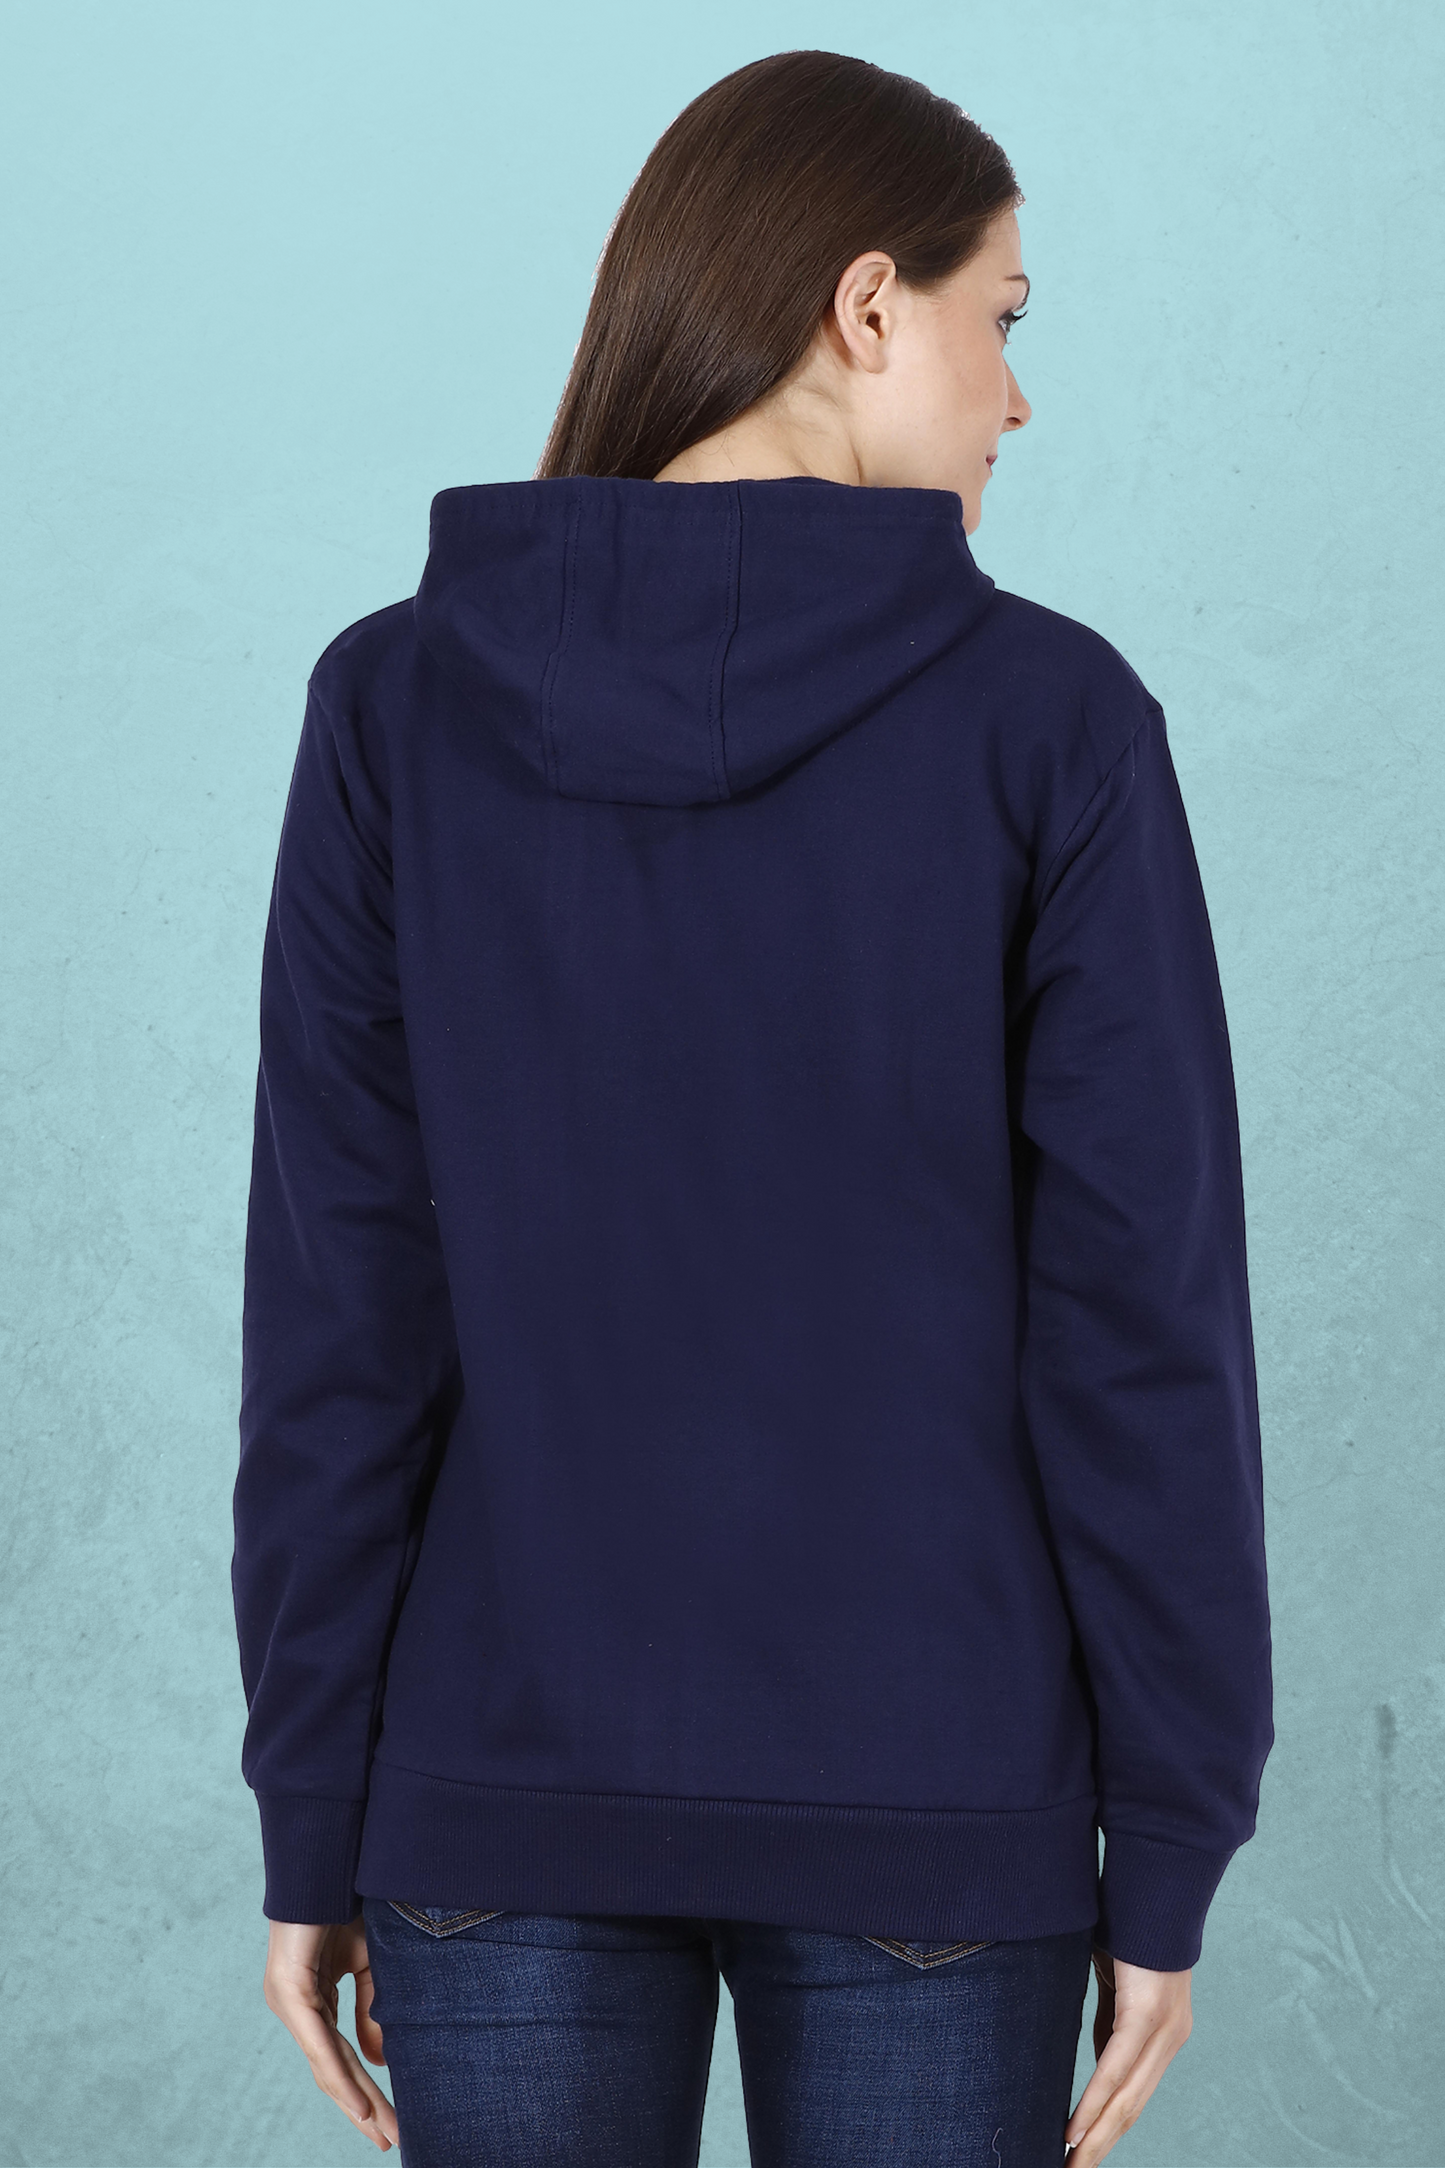 Plain Navy Blue Hoodie For Women